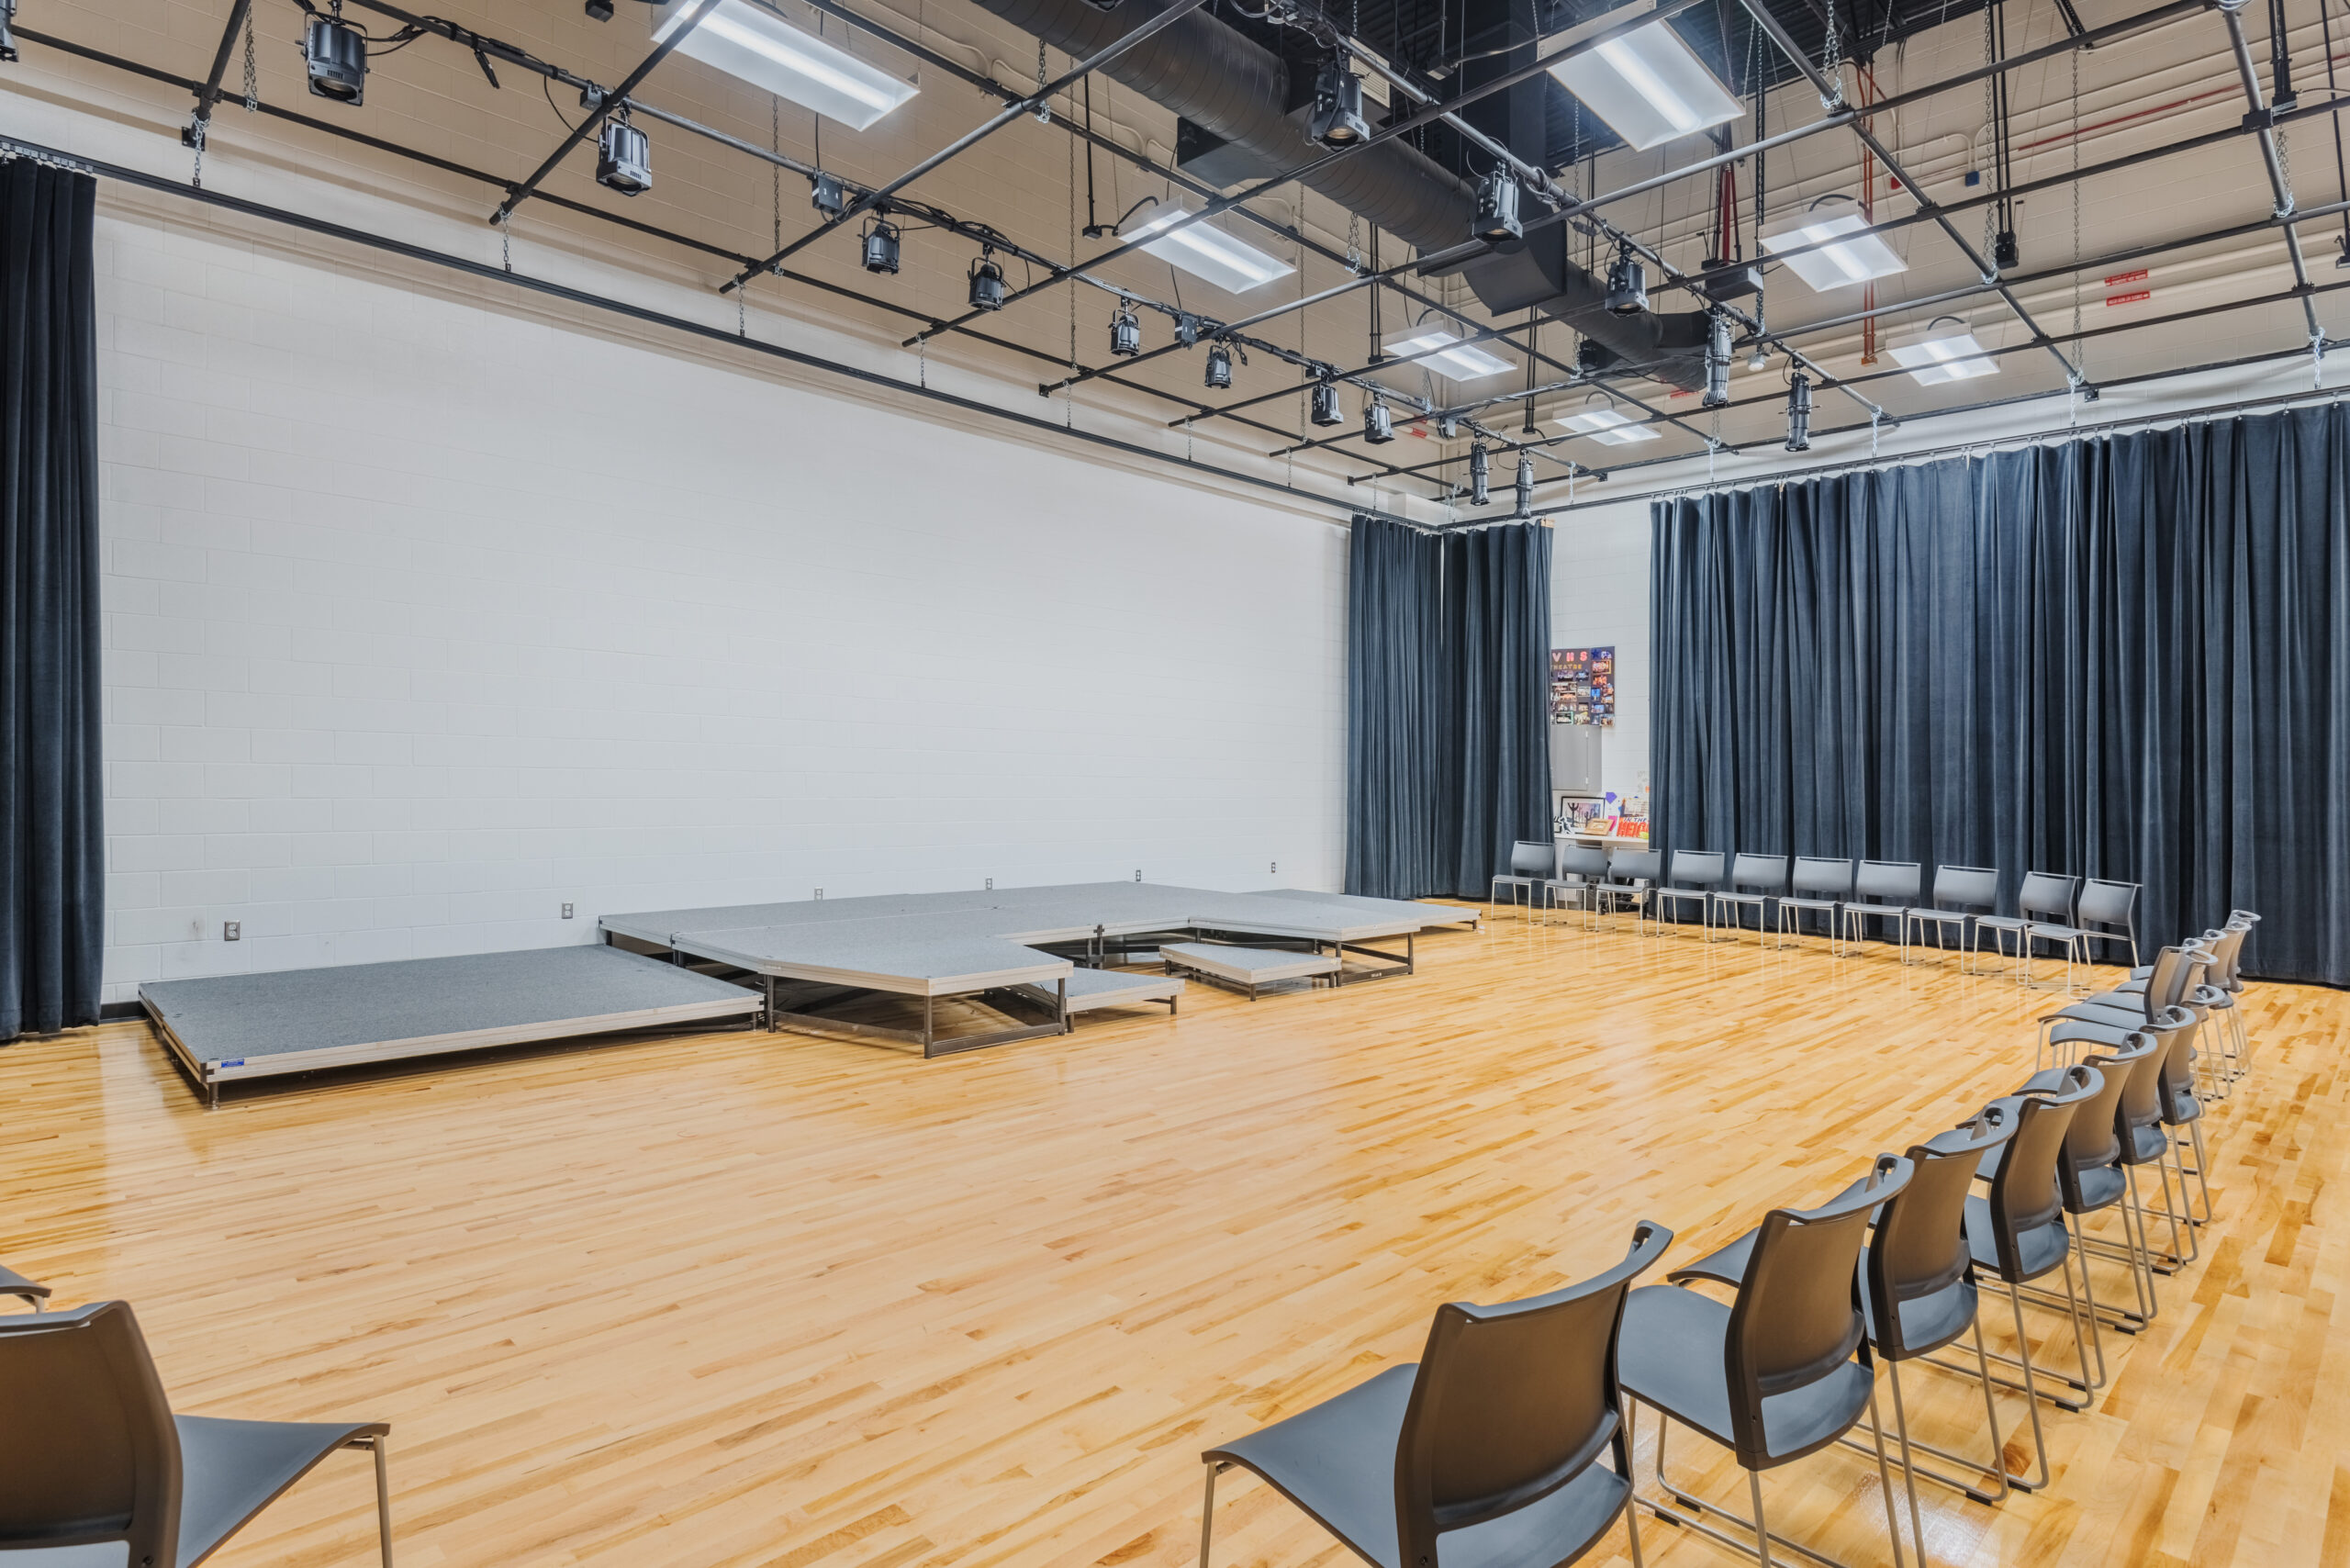 Fuquay-Varina High School Drama Room with a Platform and Overhead Stage Lighting